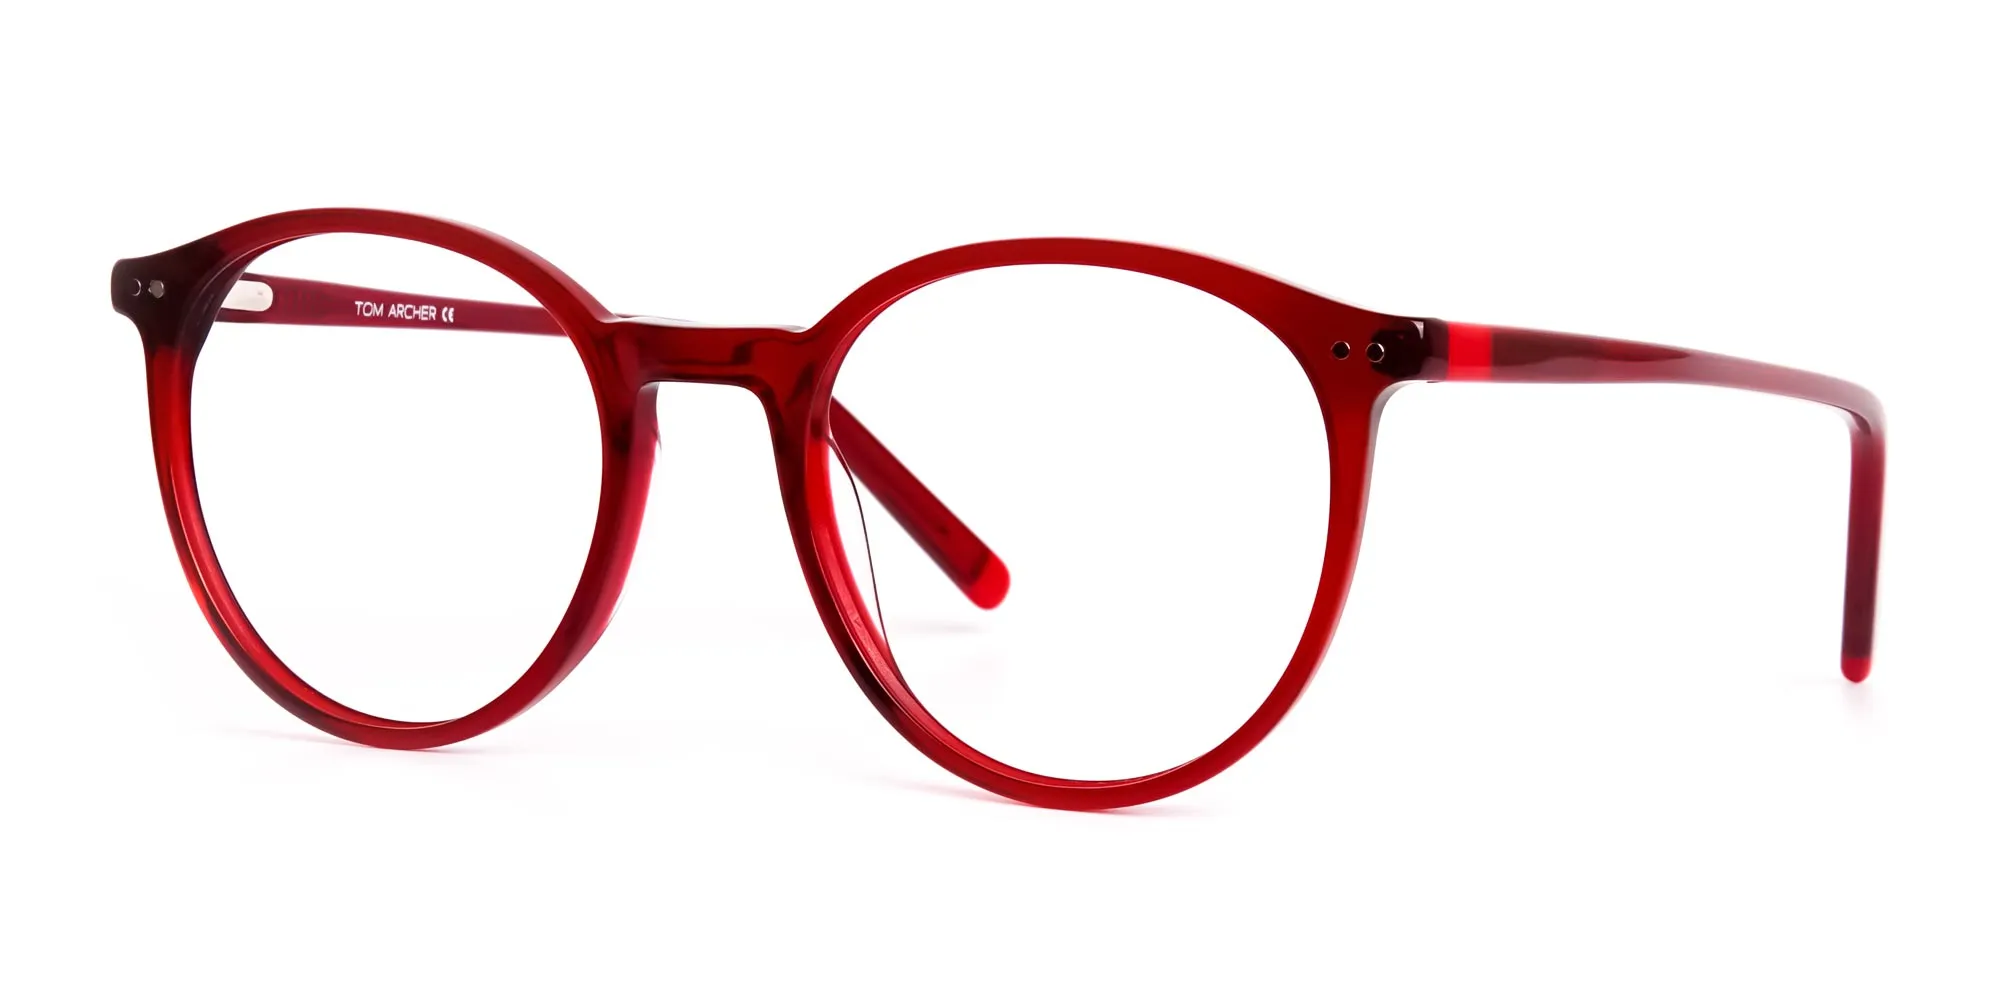 dark and wine red round glasses frames